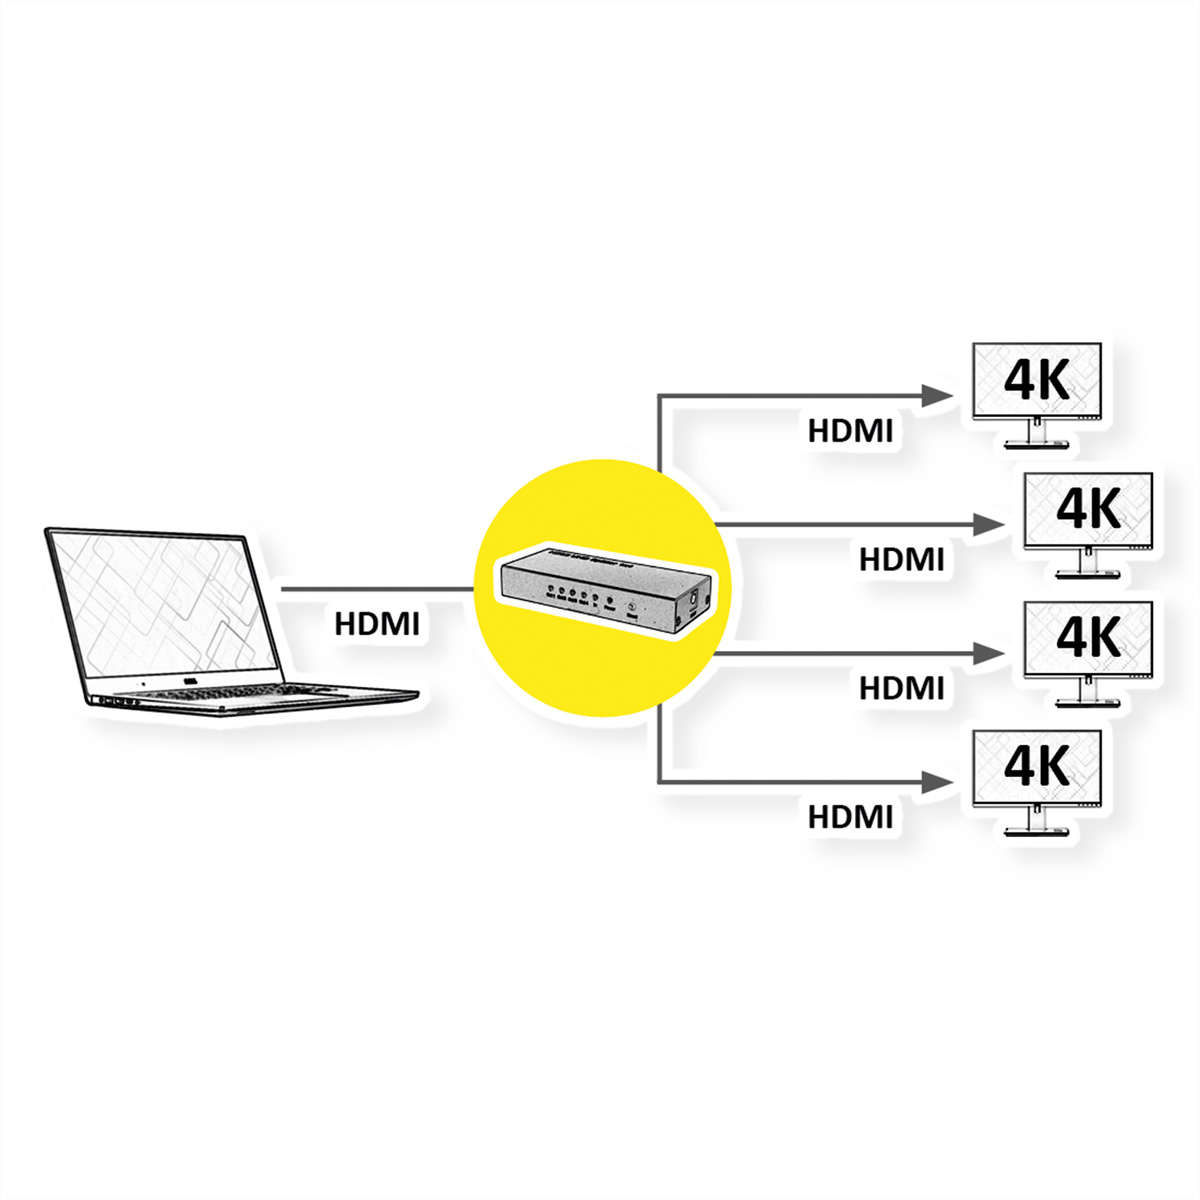 ROLINE 4K HDMI 4fach HDMI-Video-Splitter Video-Splitter